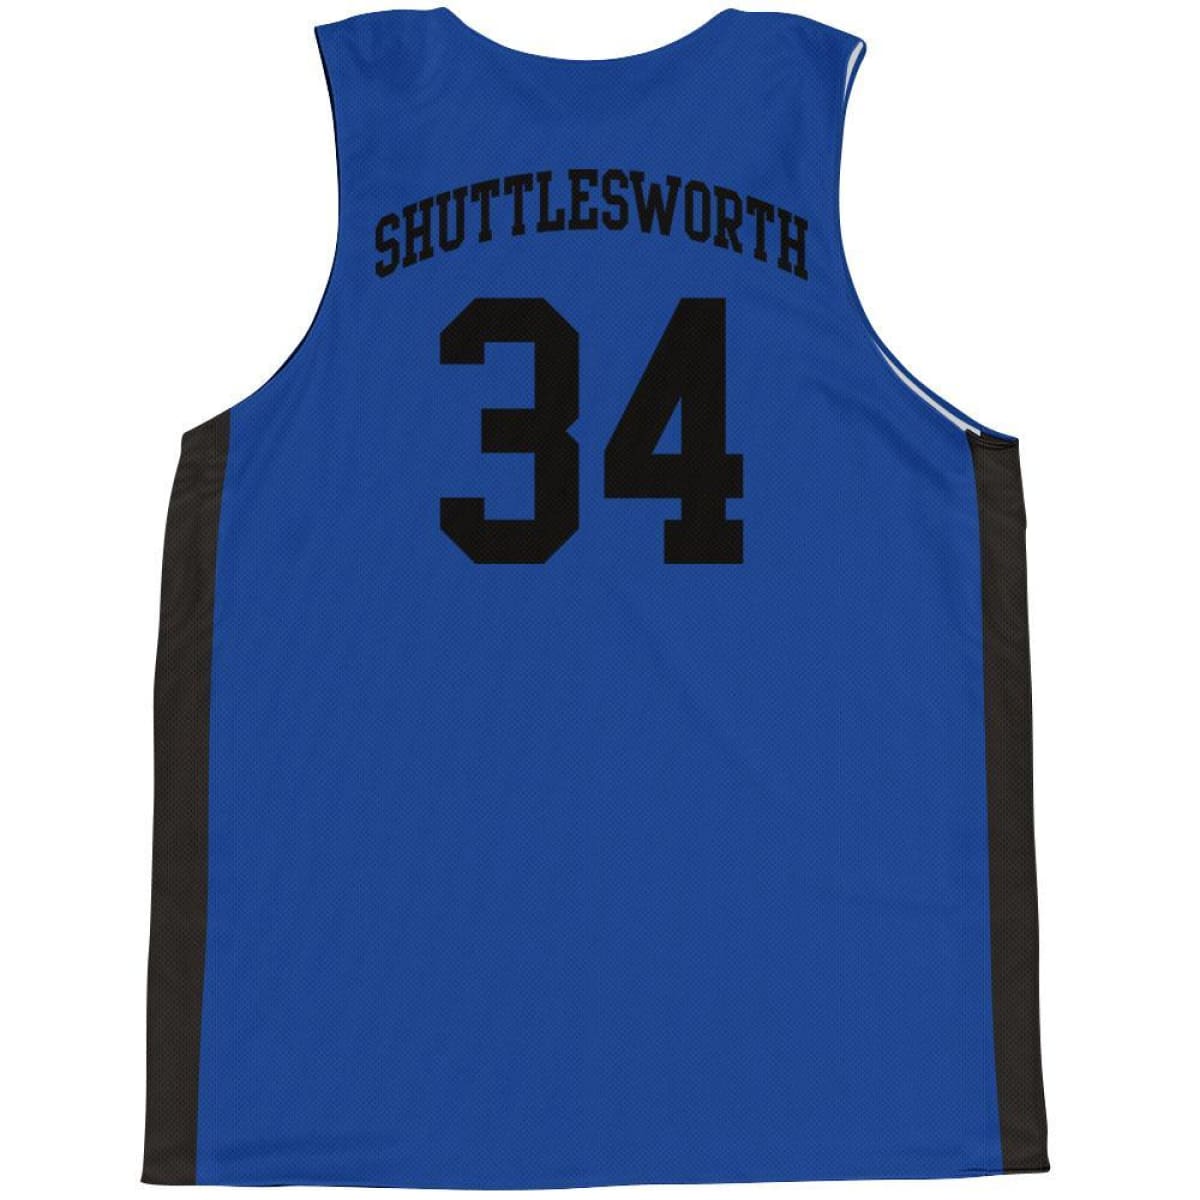 shuttlesworth jersey